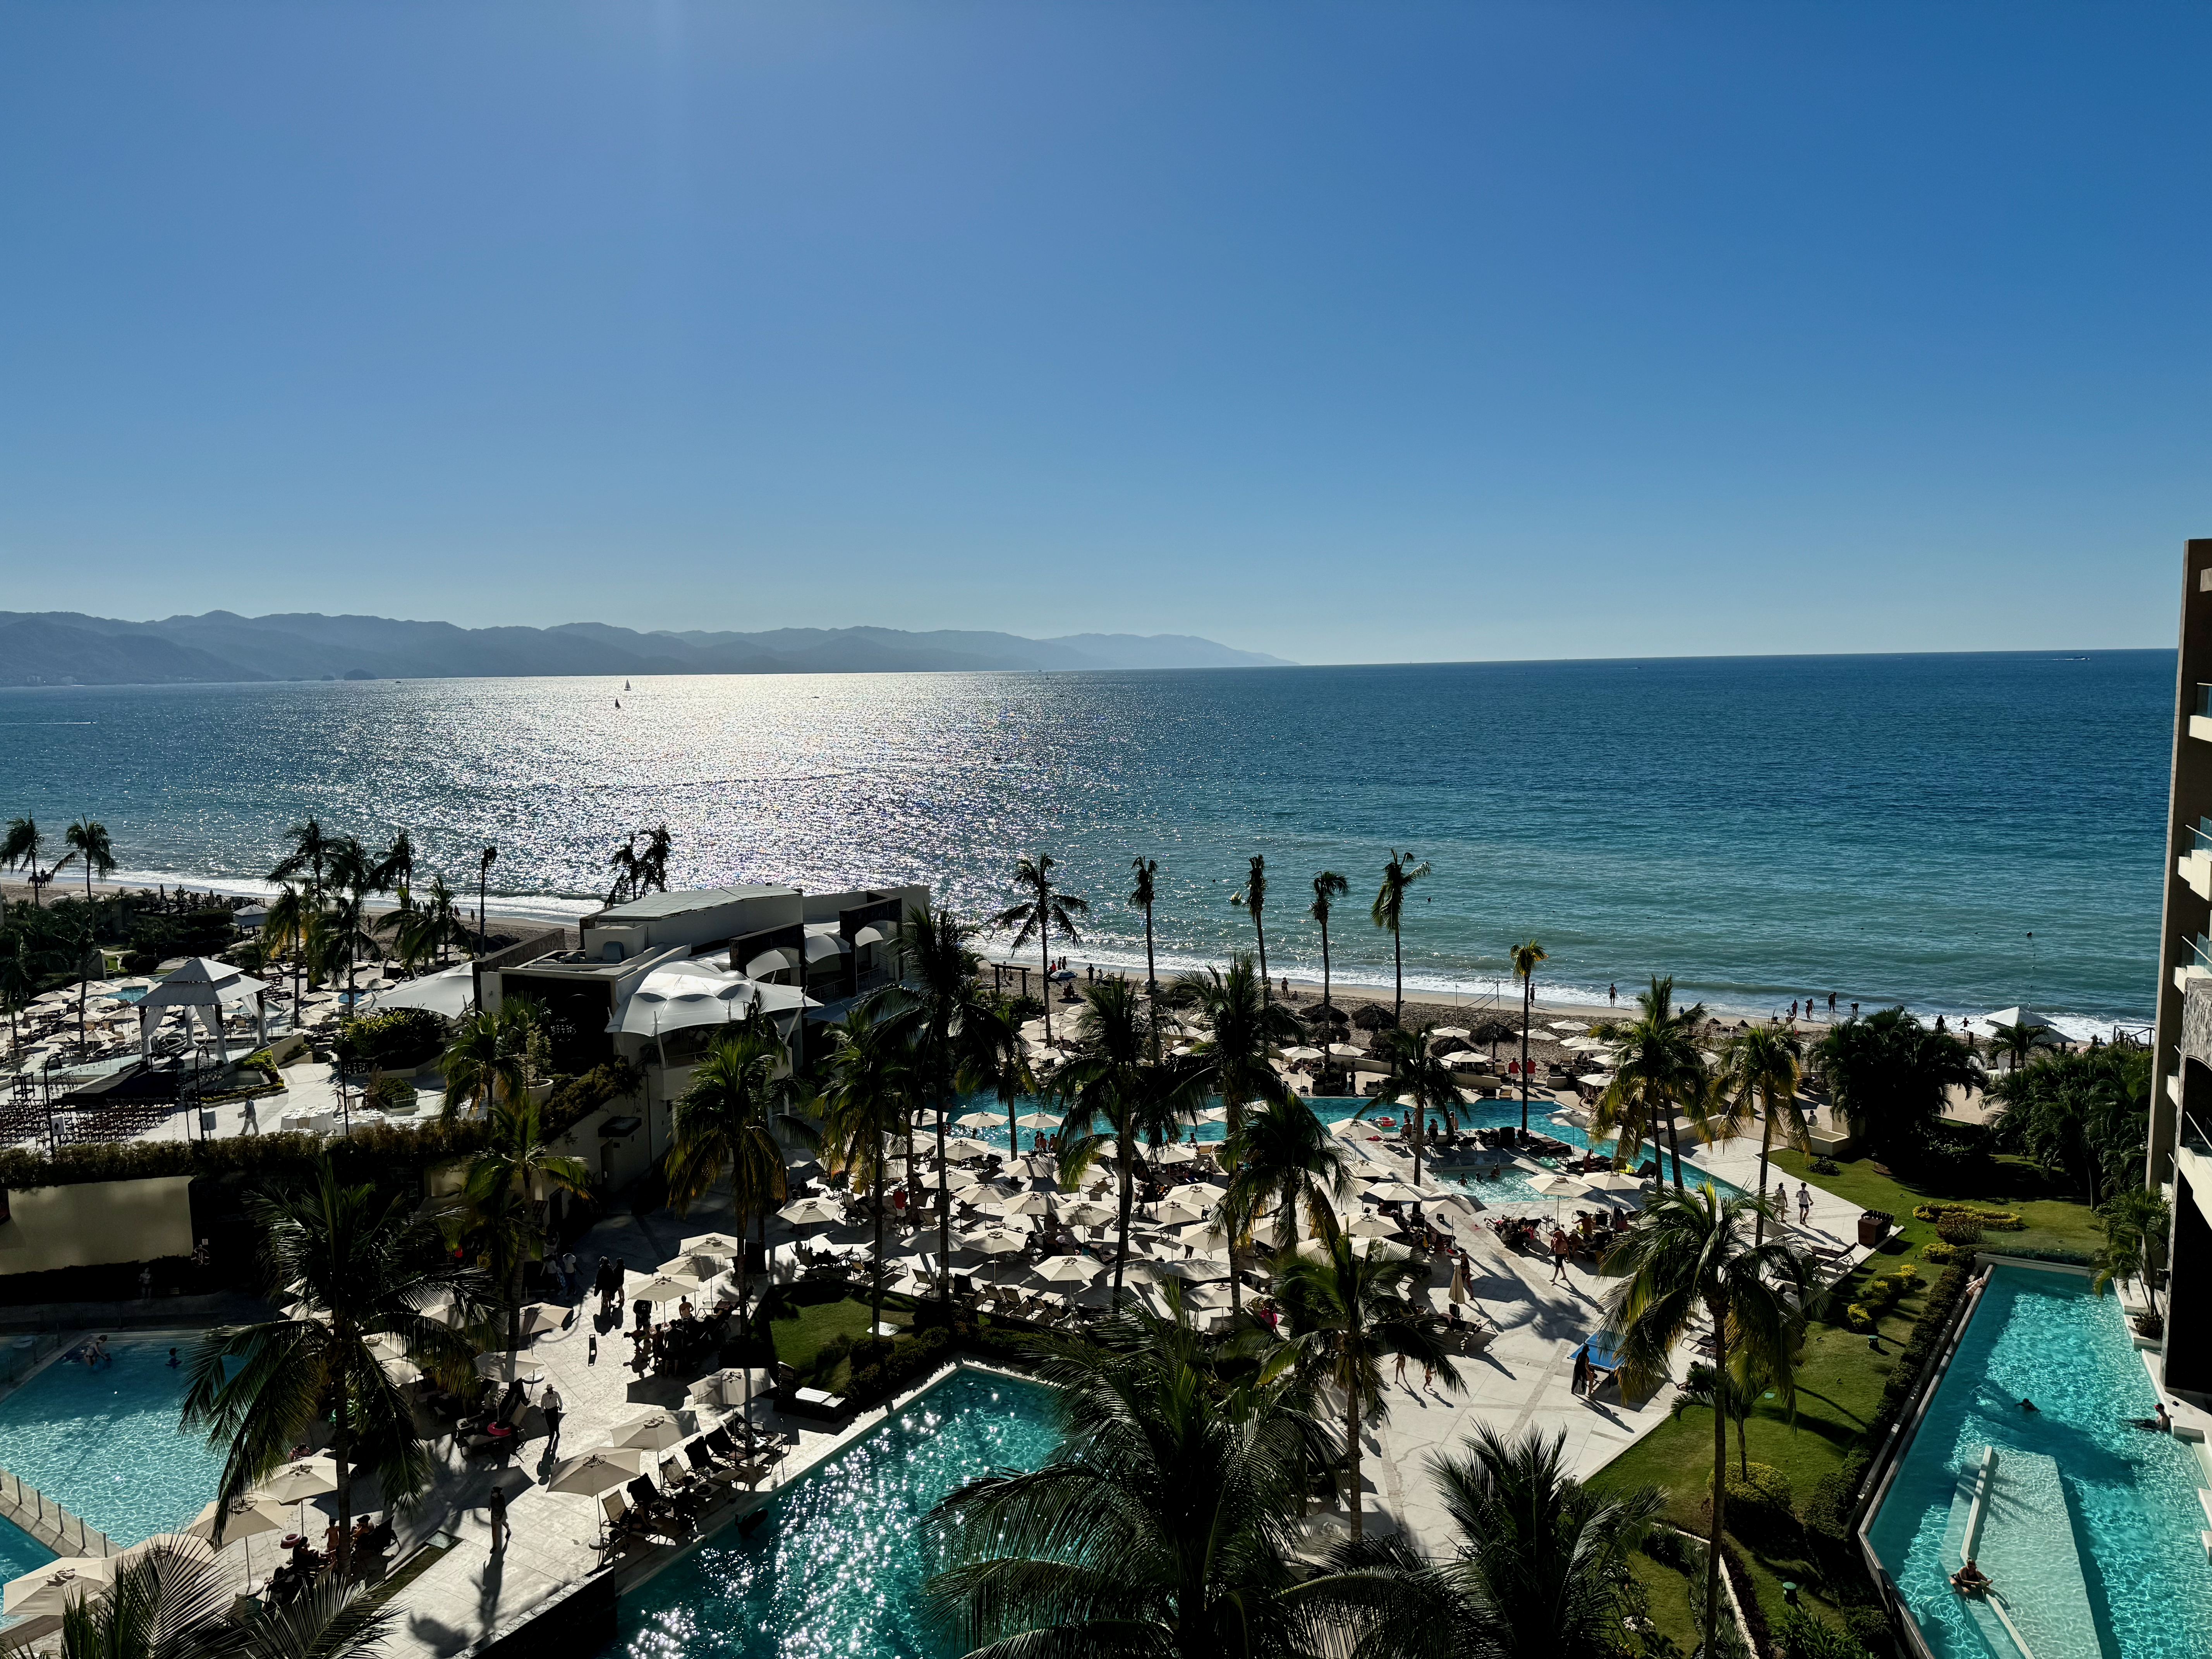 Is Dreams Resort Puerto Vallarta worth the money